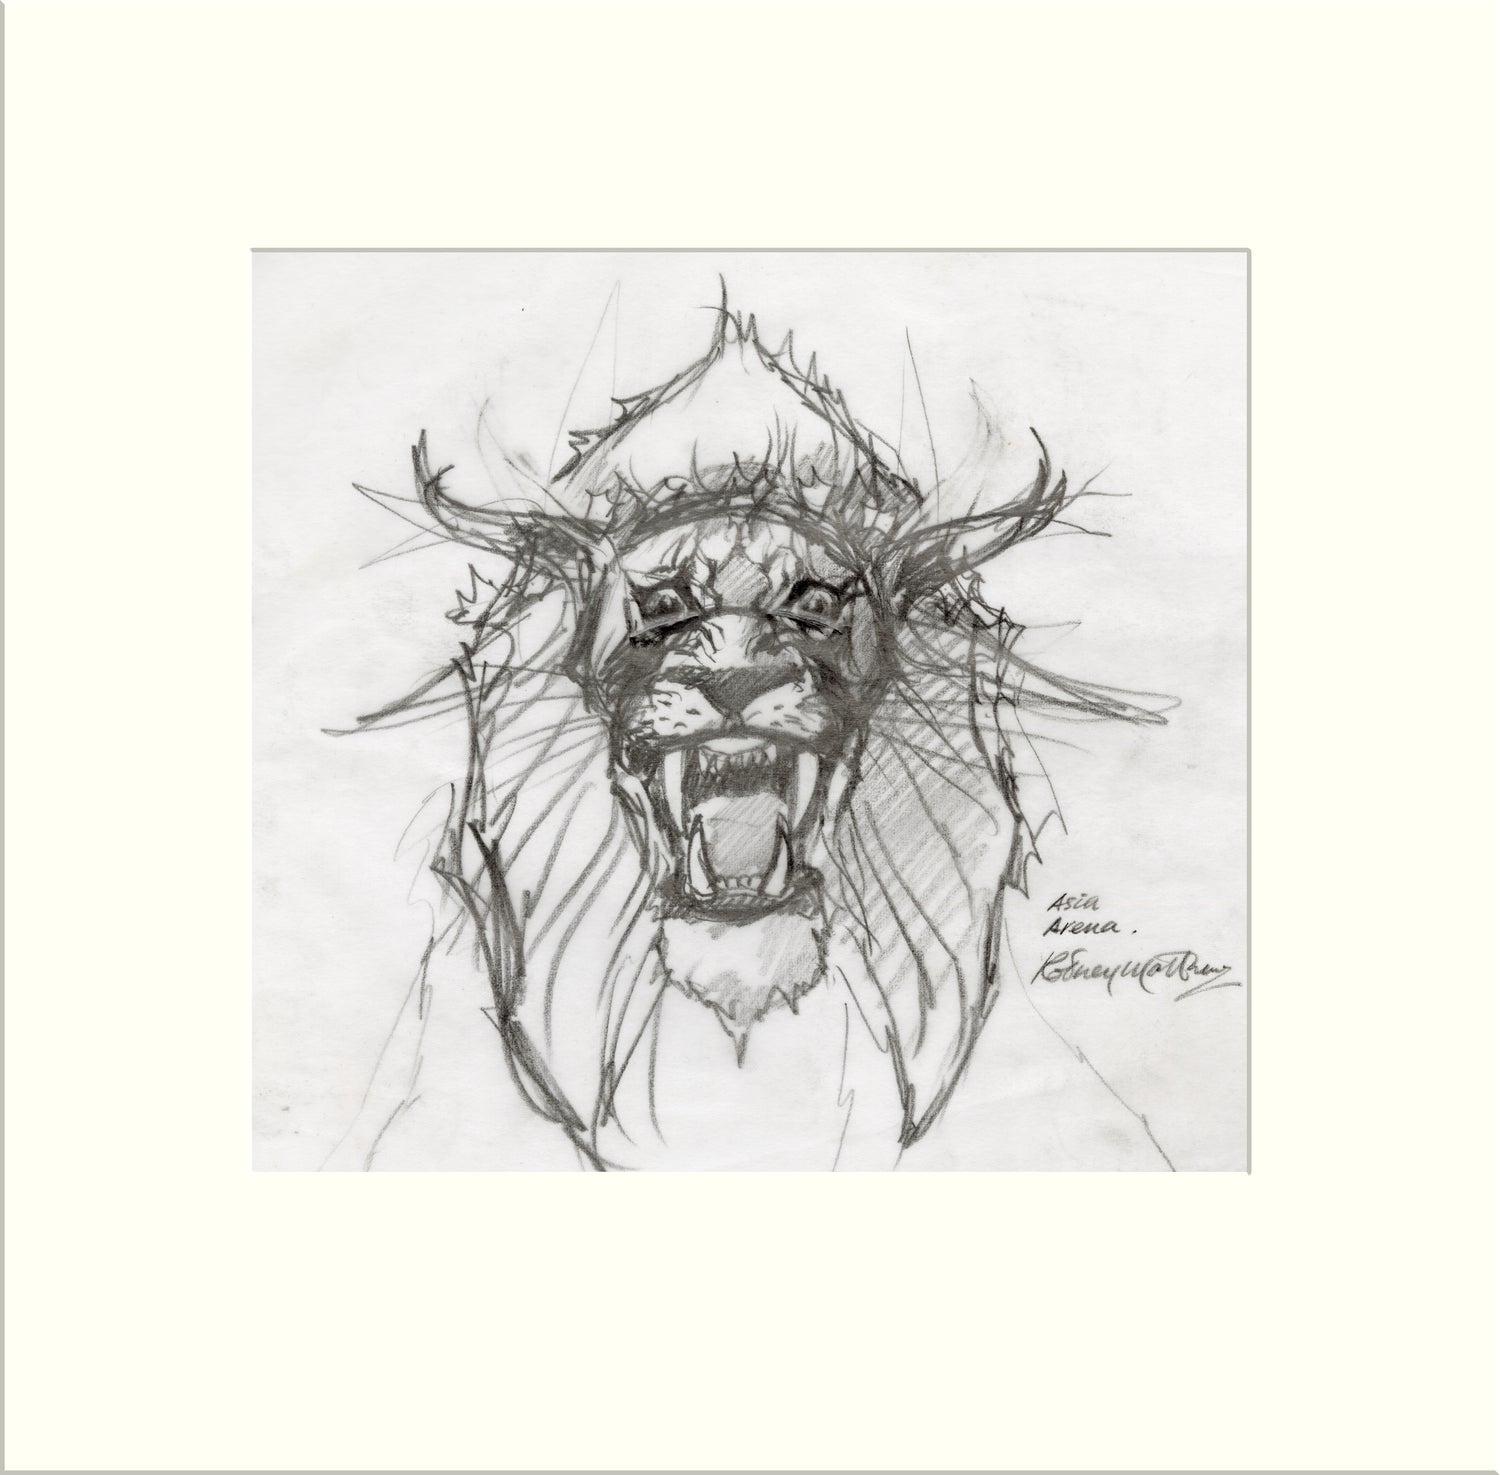 Detail from Arena (Alternative): Lion (Asia) preliminary sketch by Rodney Matthews